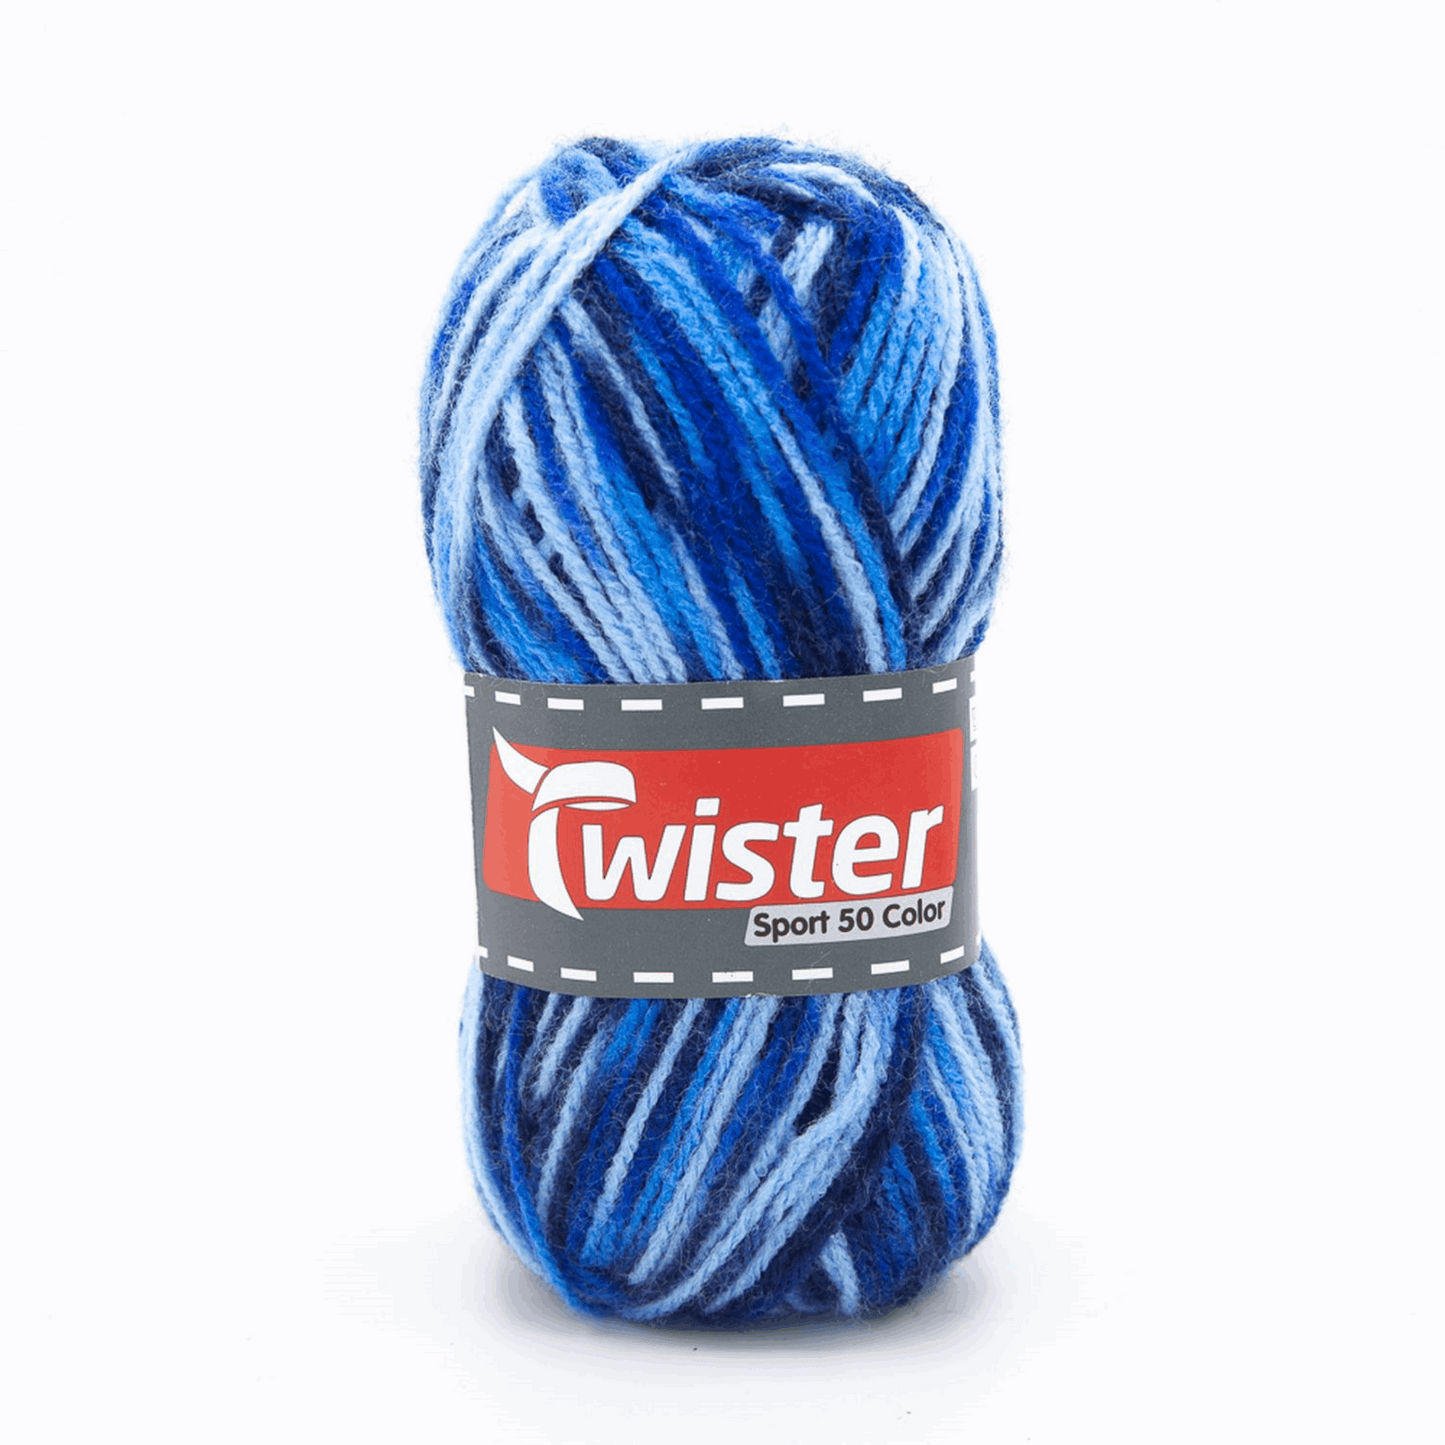 Twister Sport 50, color, 98322, Farbe royal/blau 4